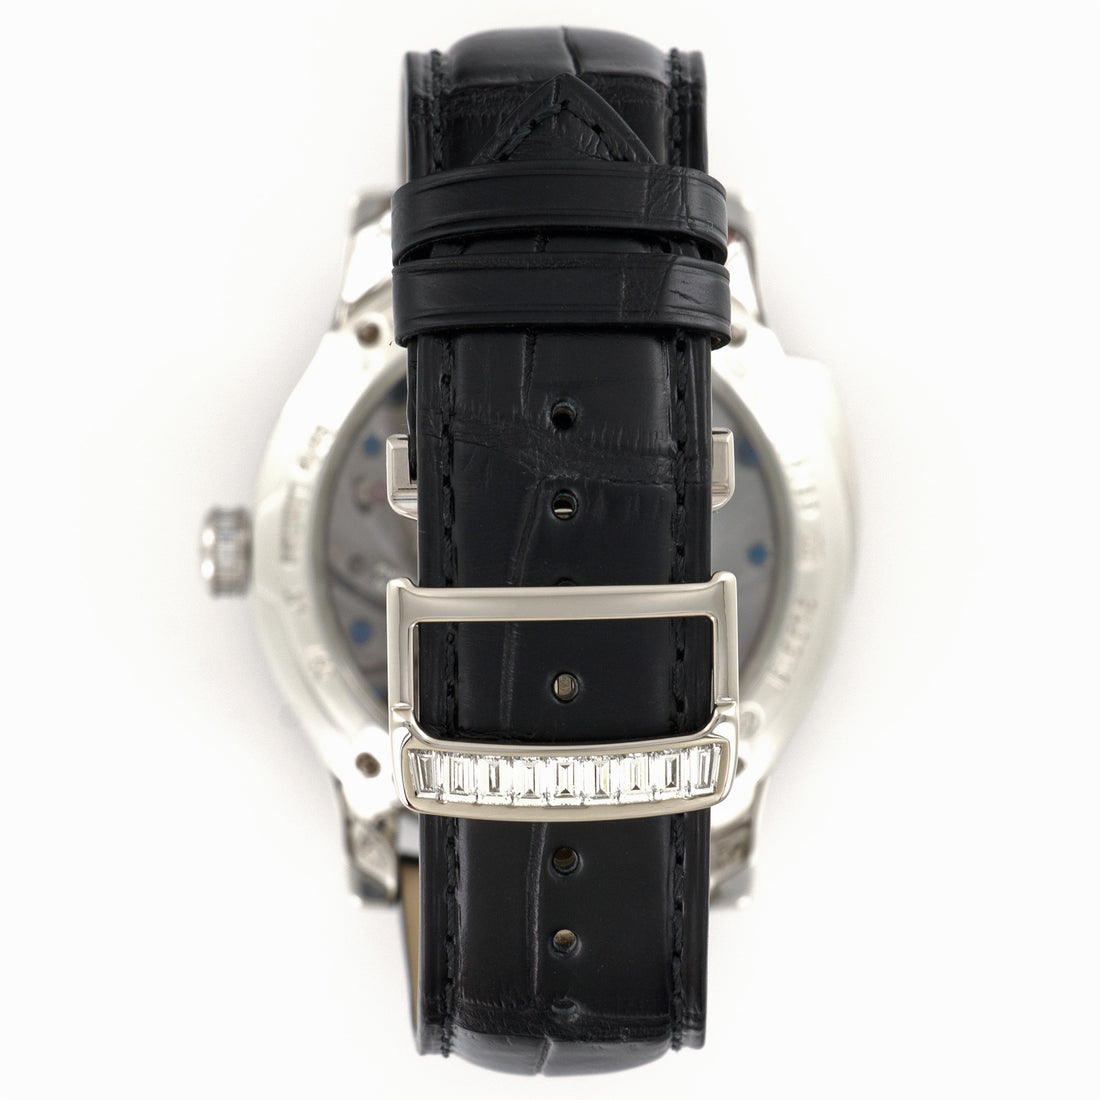 Jaeger LeCoultre Platinum Master Control Minute Repeater Baguette Diamond Watch